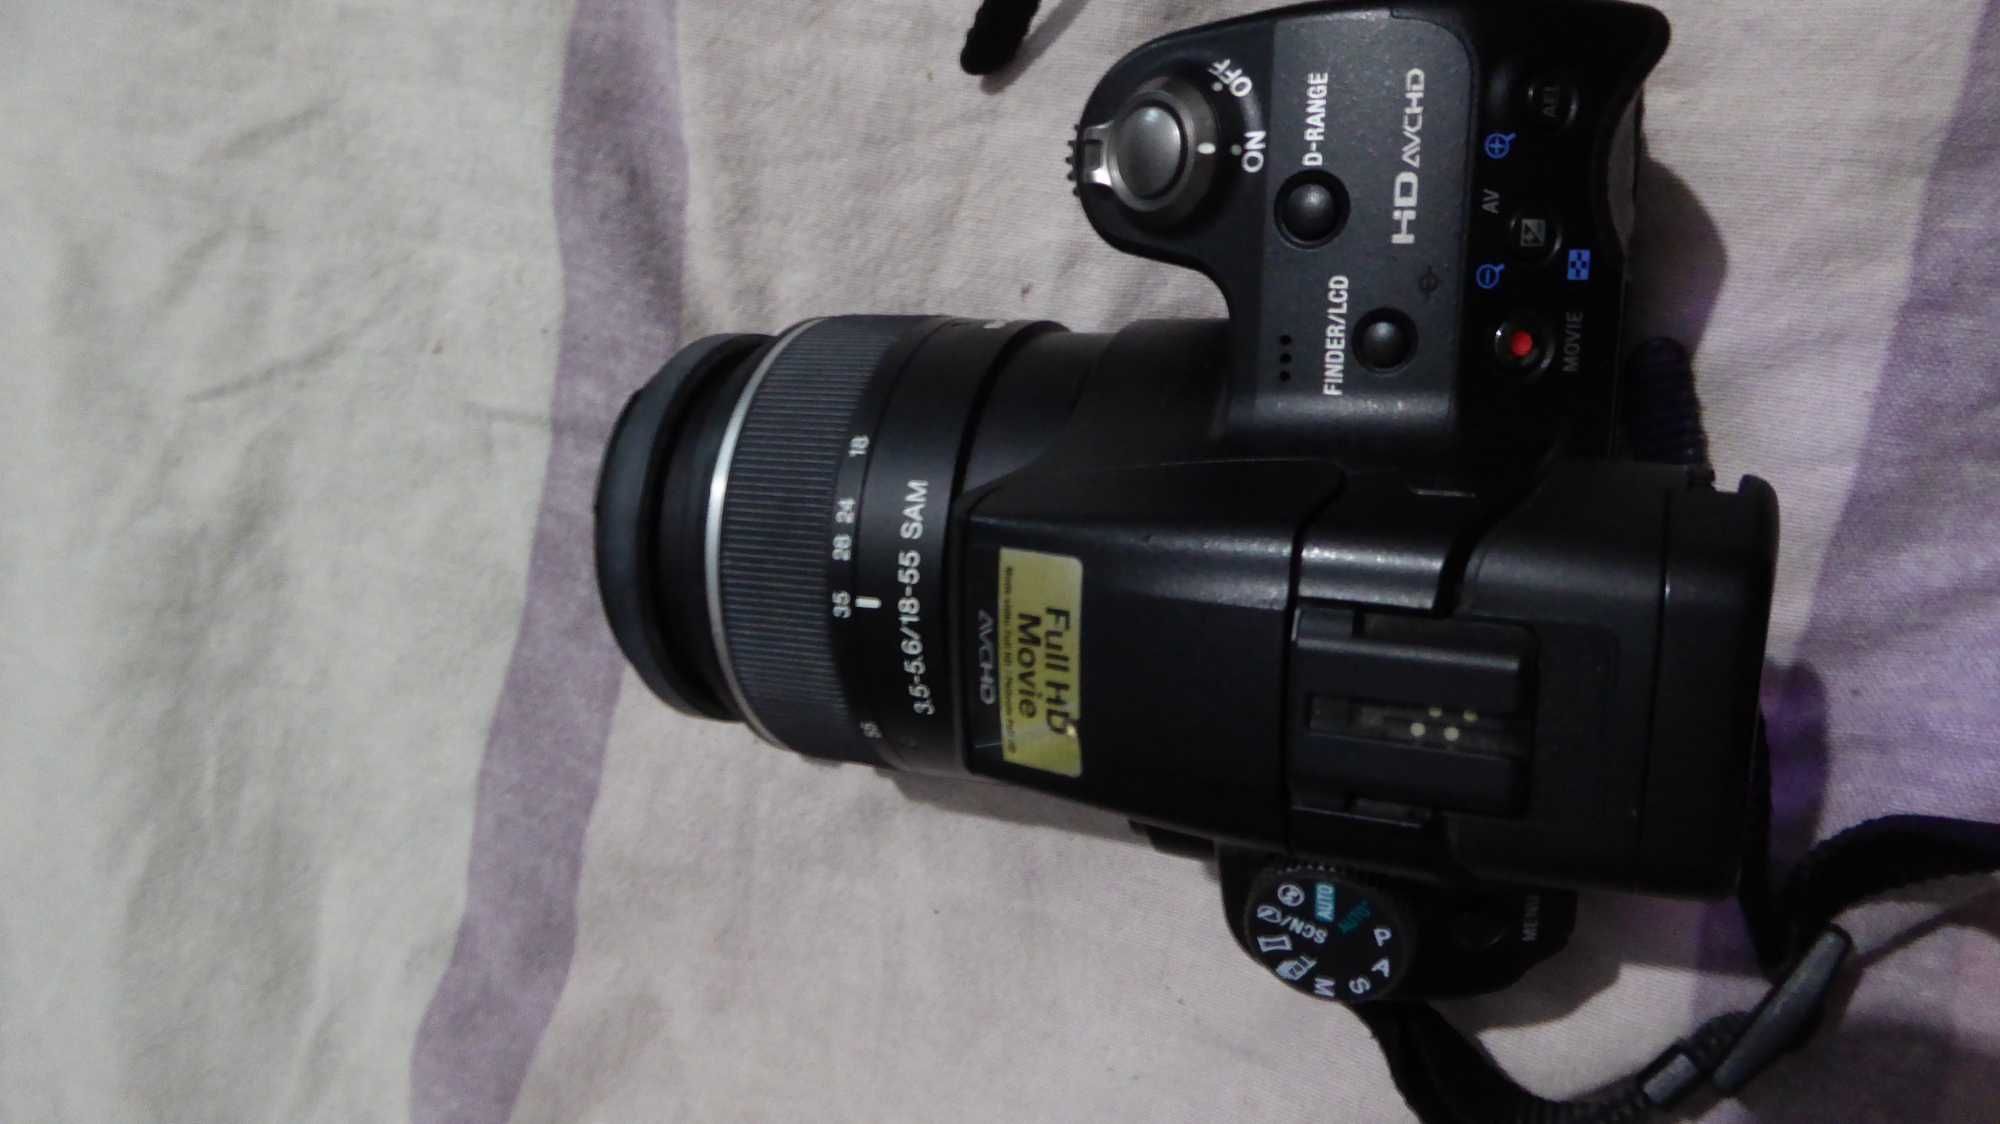 Aparatul foto digital DSLR Sony A35 cu obiectiv  18-55 mm